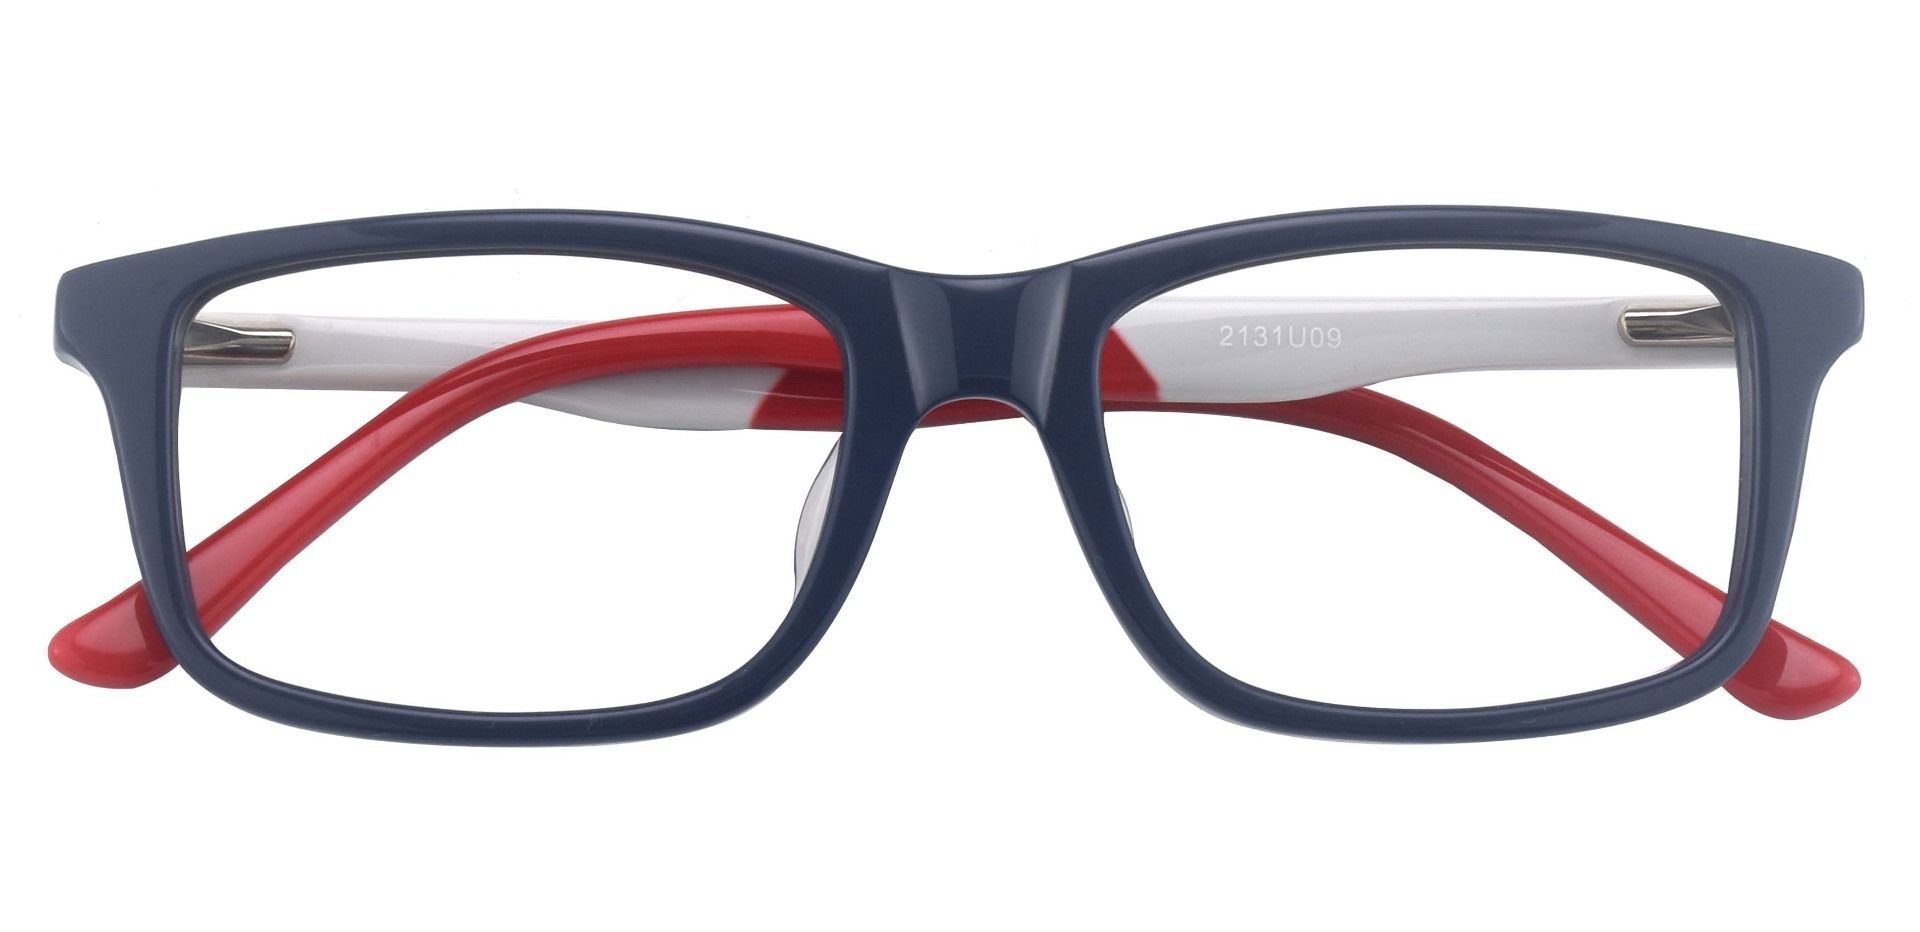 Titletown Rectangle Progressive Glasses - Blue White Red